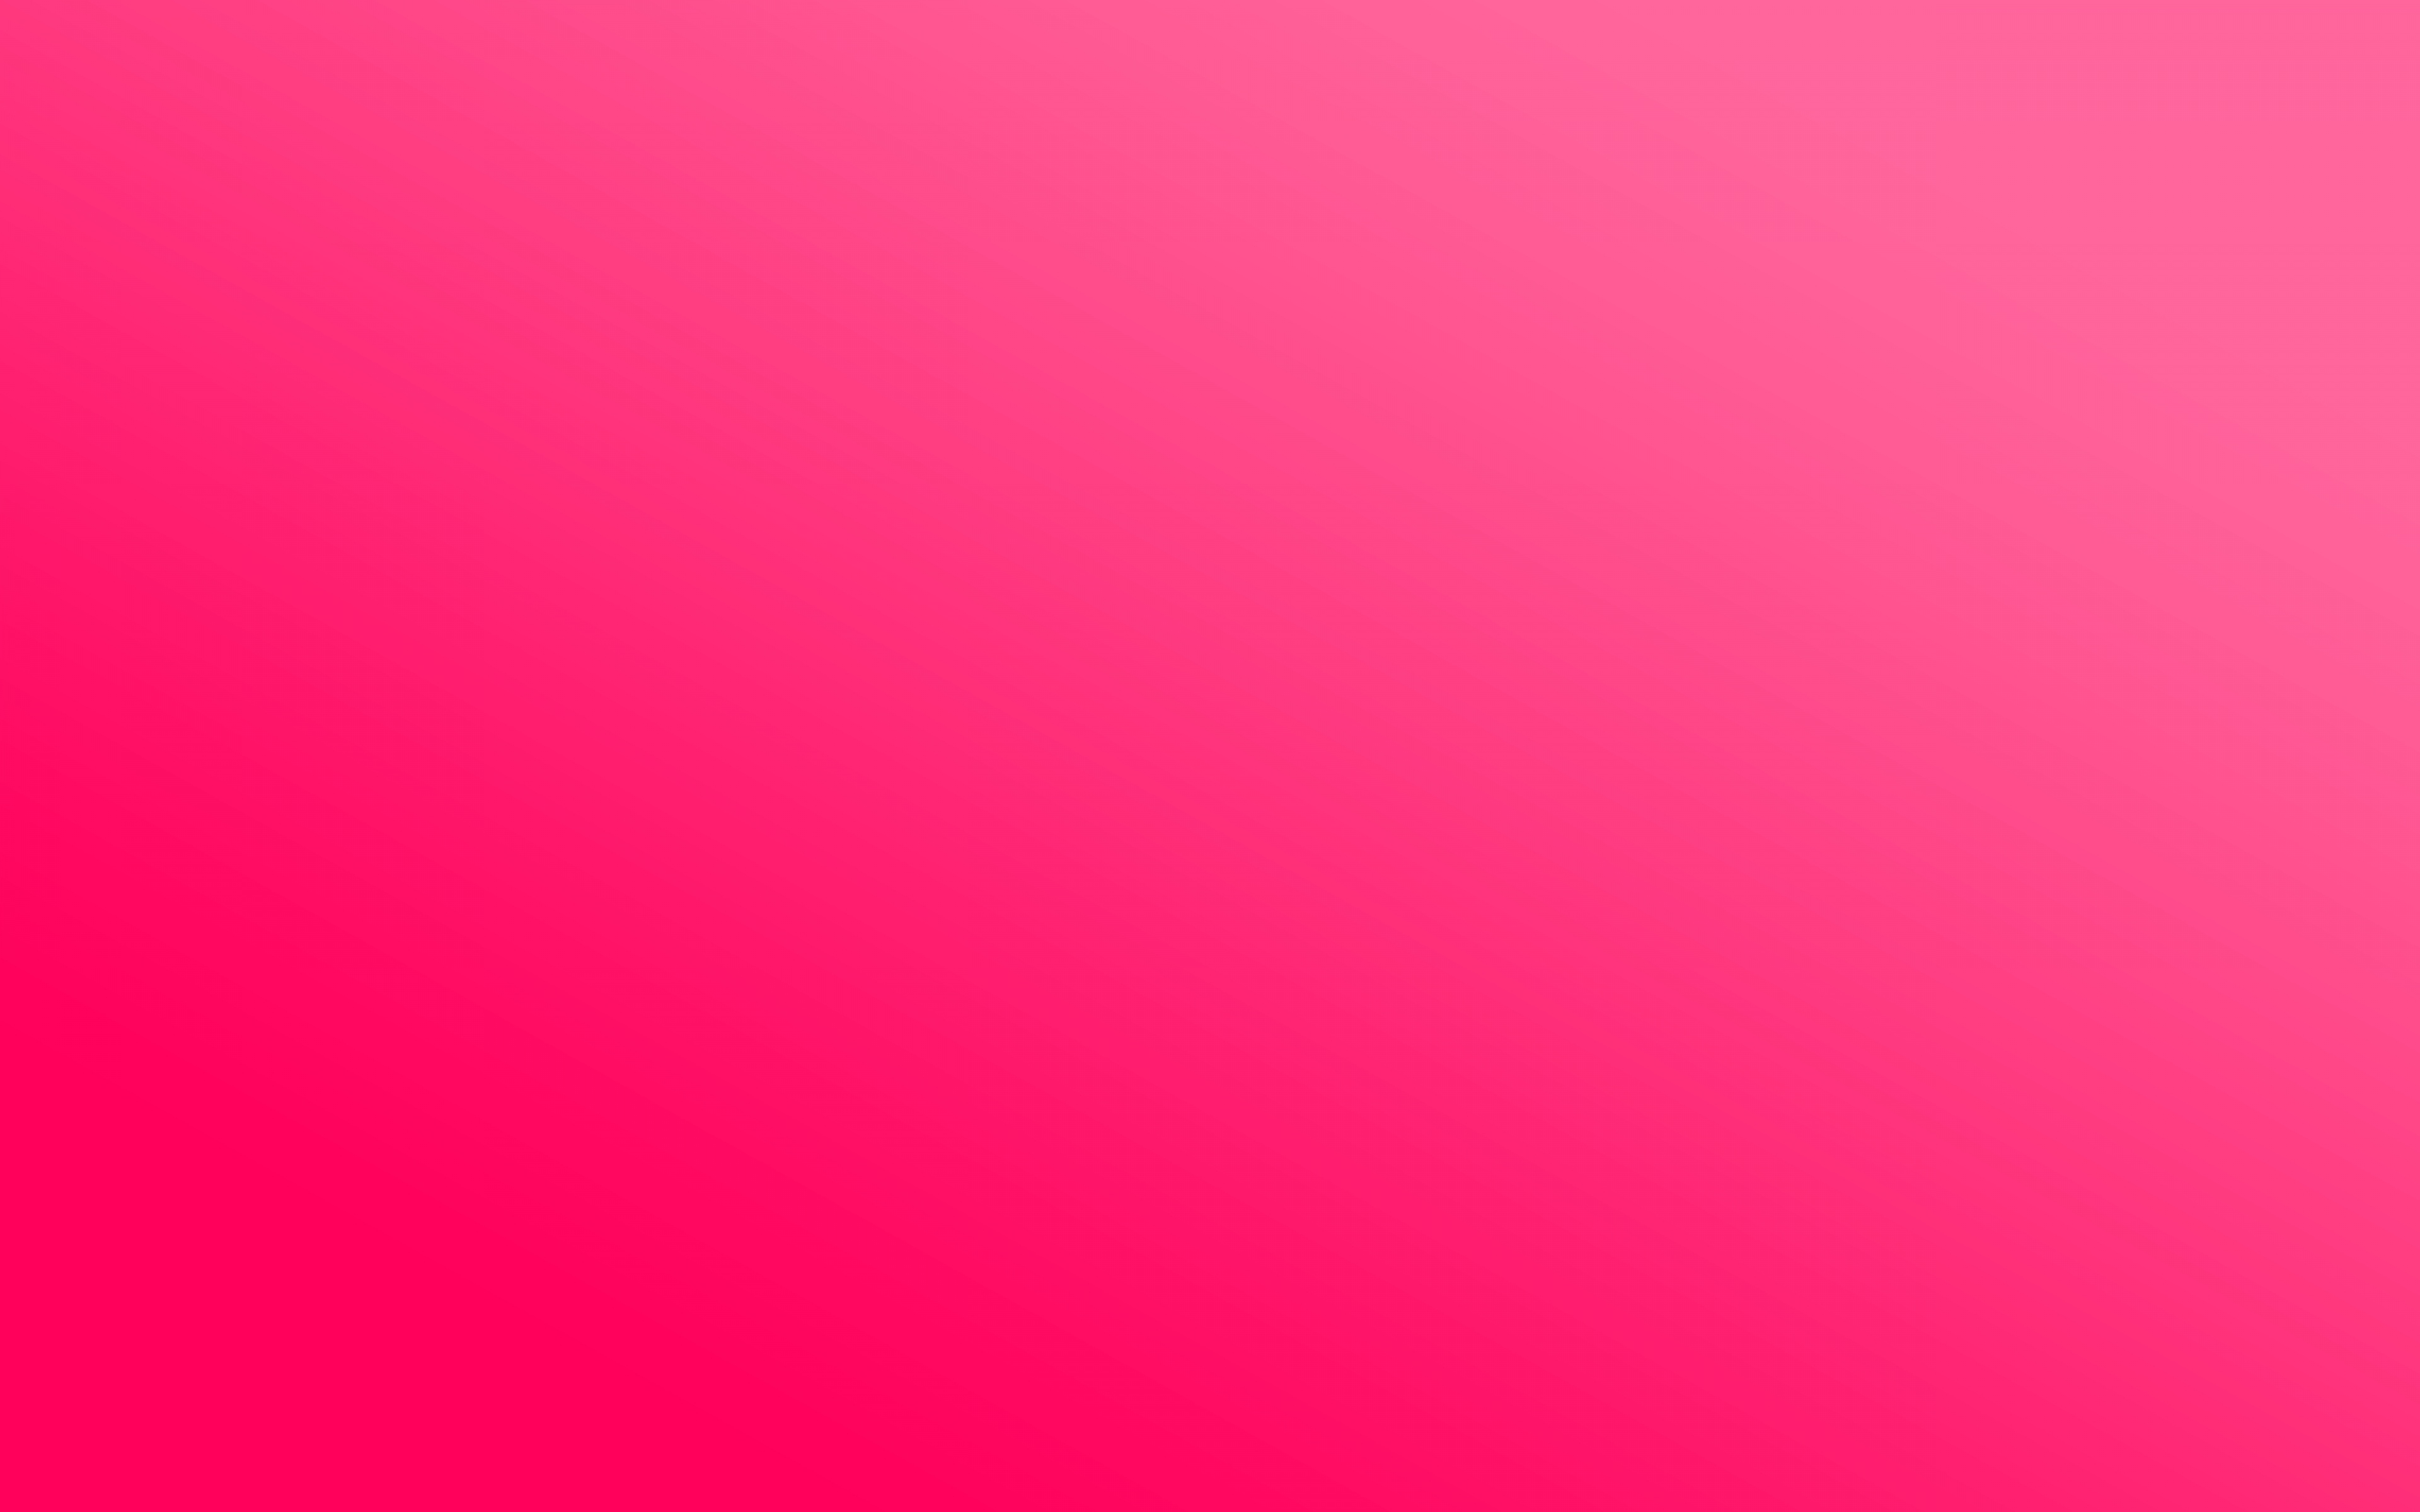 Cute Pink Wallpaper Hd Cheap Deals, Save 68% | jlcatj.gob.mx